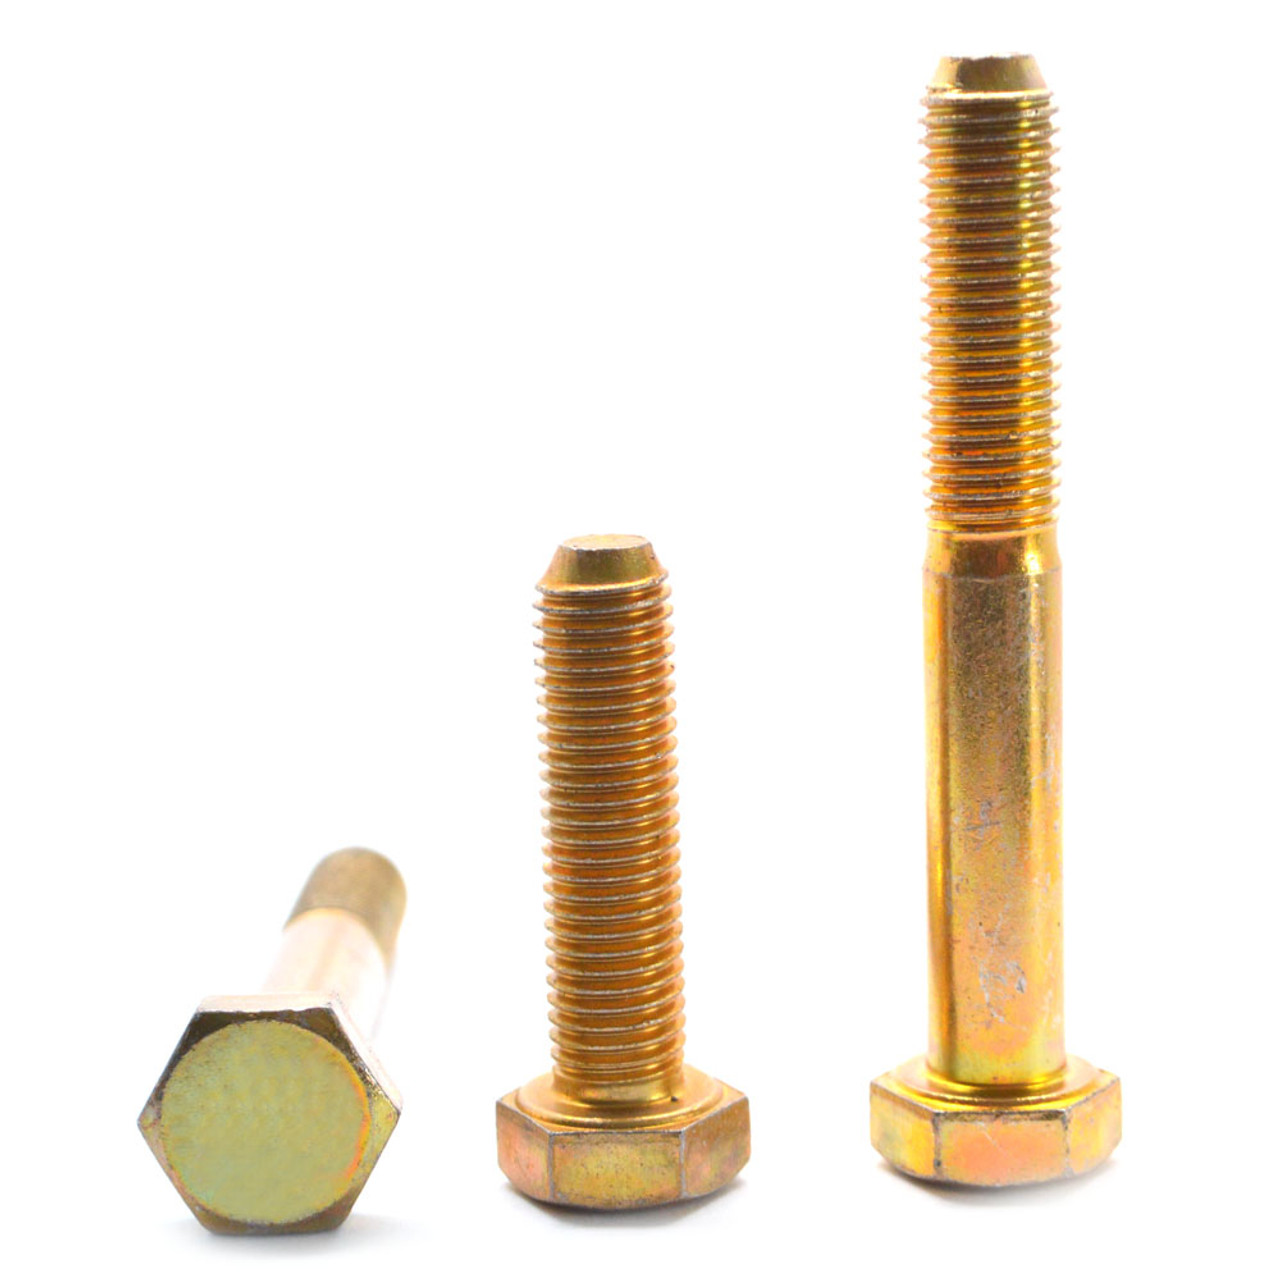 M22 x 2.50 x 90 MM (PT) Coarse Thread DIN 931 Class 10.9 Hex Cap Screw (Bolt) Alloy Steel Yellow Zinc Plated